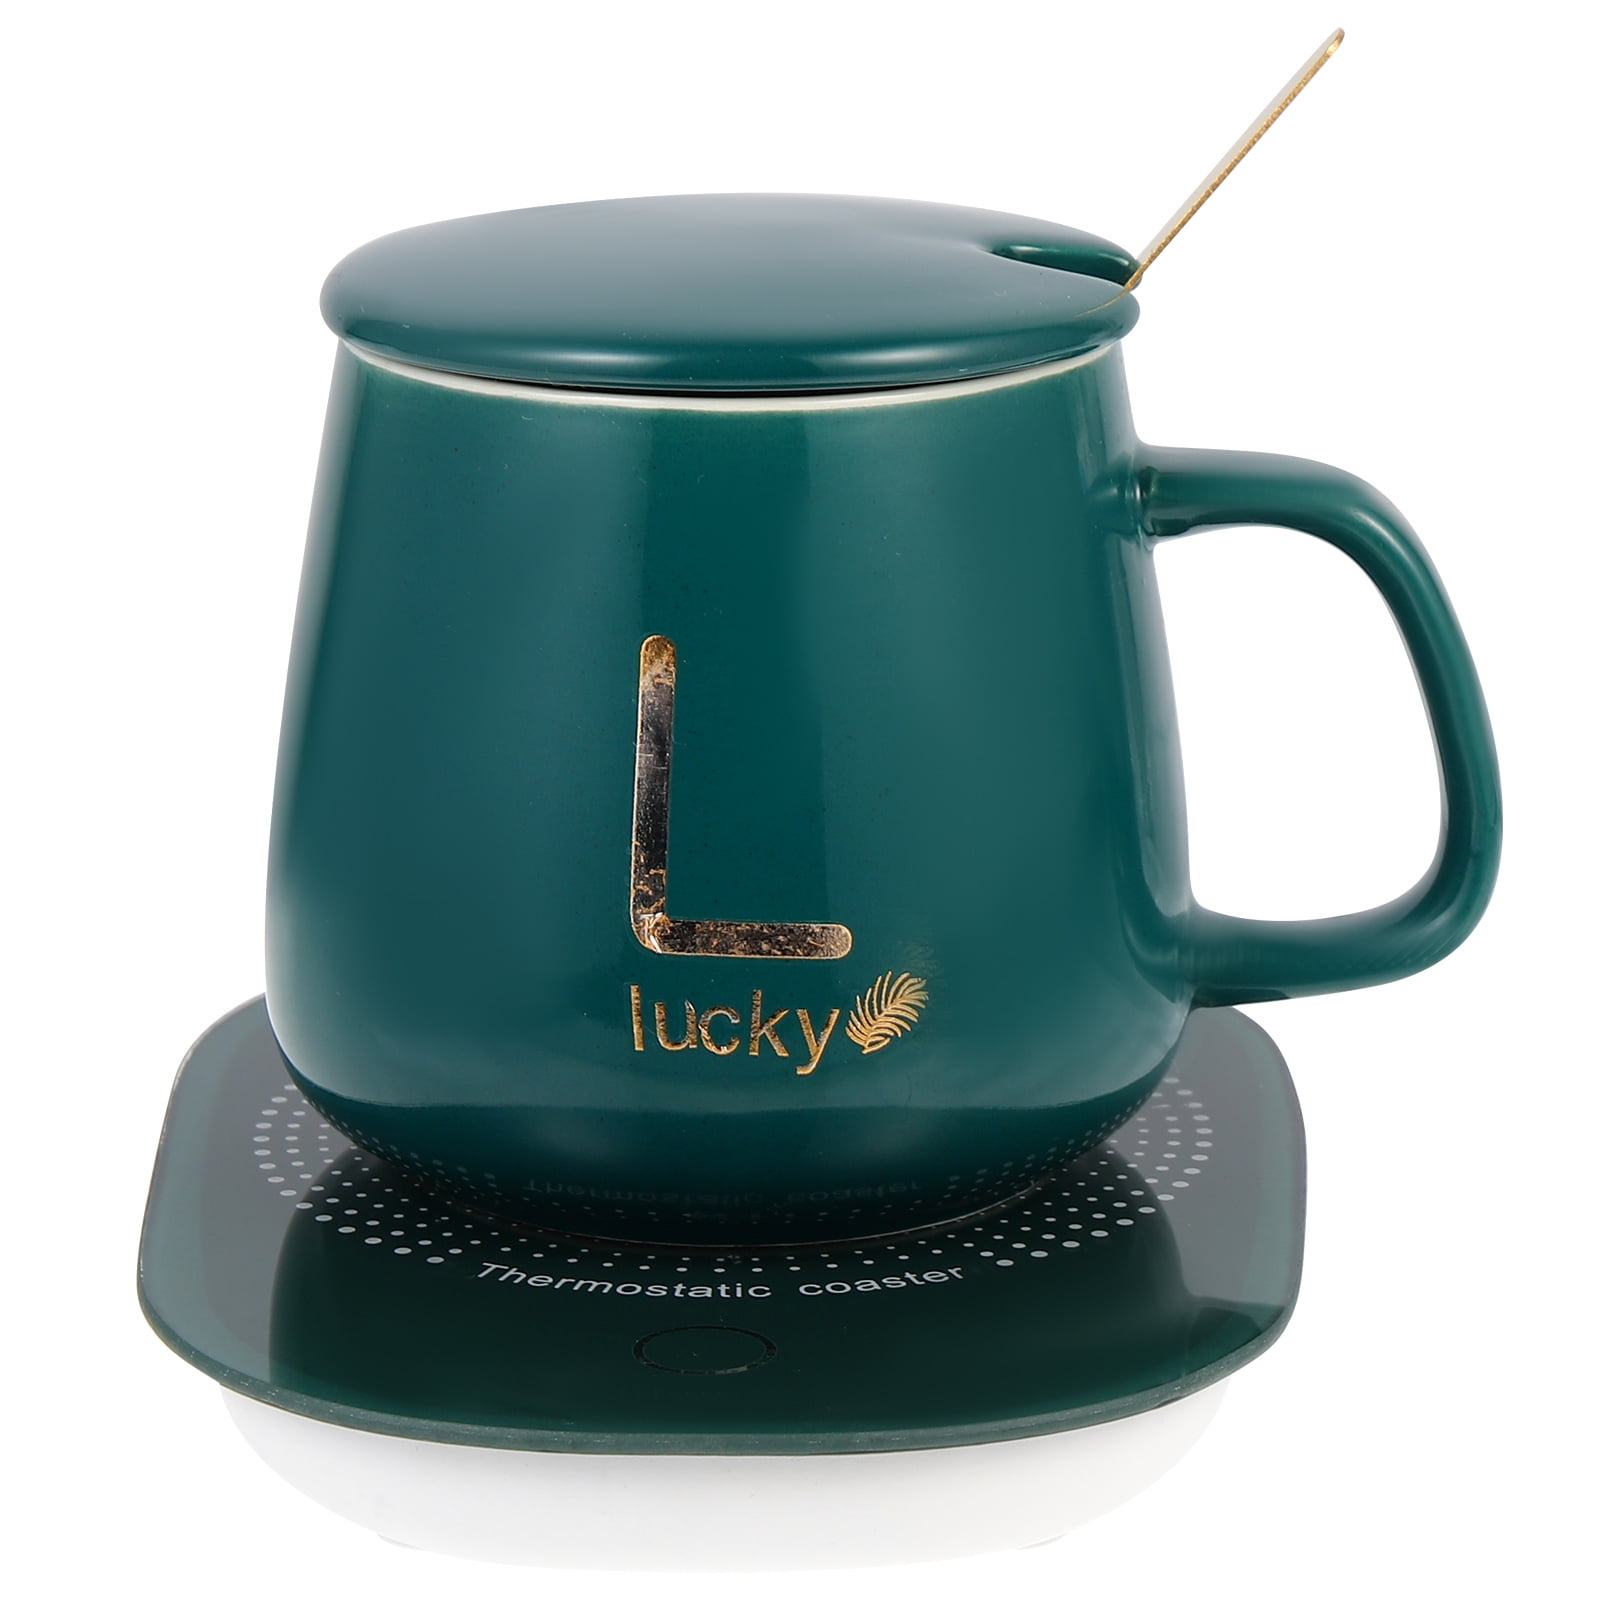 RARELEMON Coffee Mug Warmer, Electric Beverage Warmers for Office Home Desk Use, Smart Cup Warmer Thermostat Coaster for Hot Coffee Tea Espresso Milk